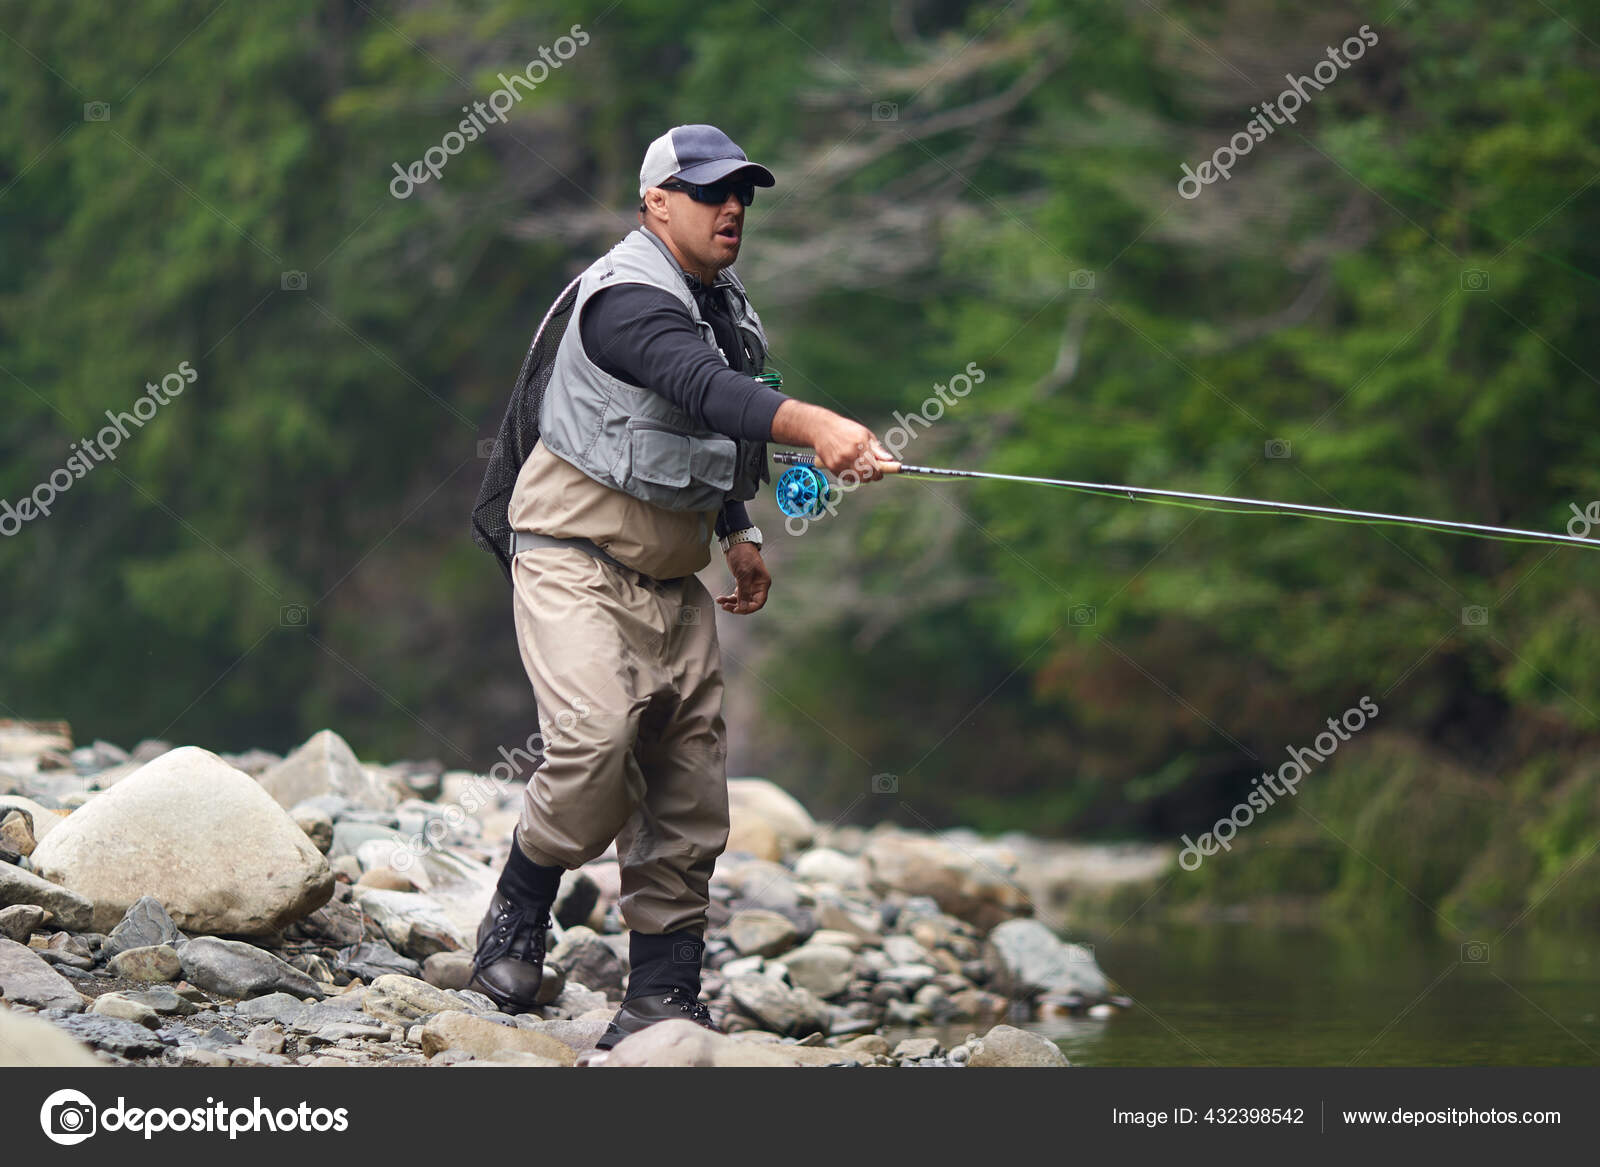 https://st2.depositphotos.com/7319880/43239/i/1600/depositphotos_432398542-stock-photo-fishermen-in-waterproof-outfit-fishing.jpg